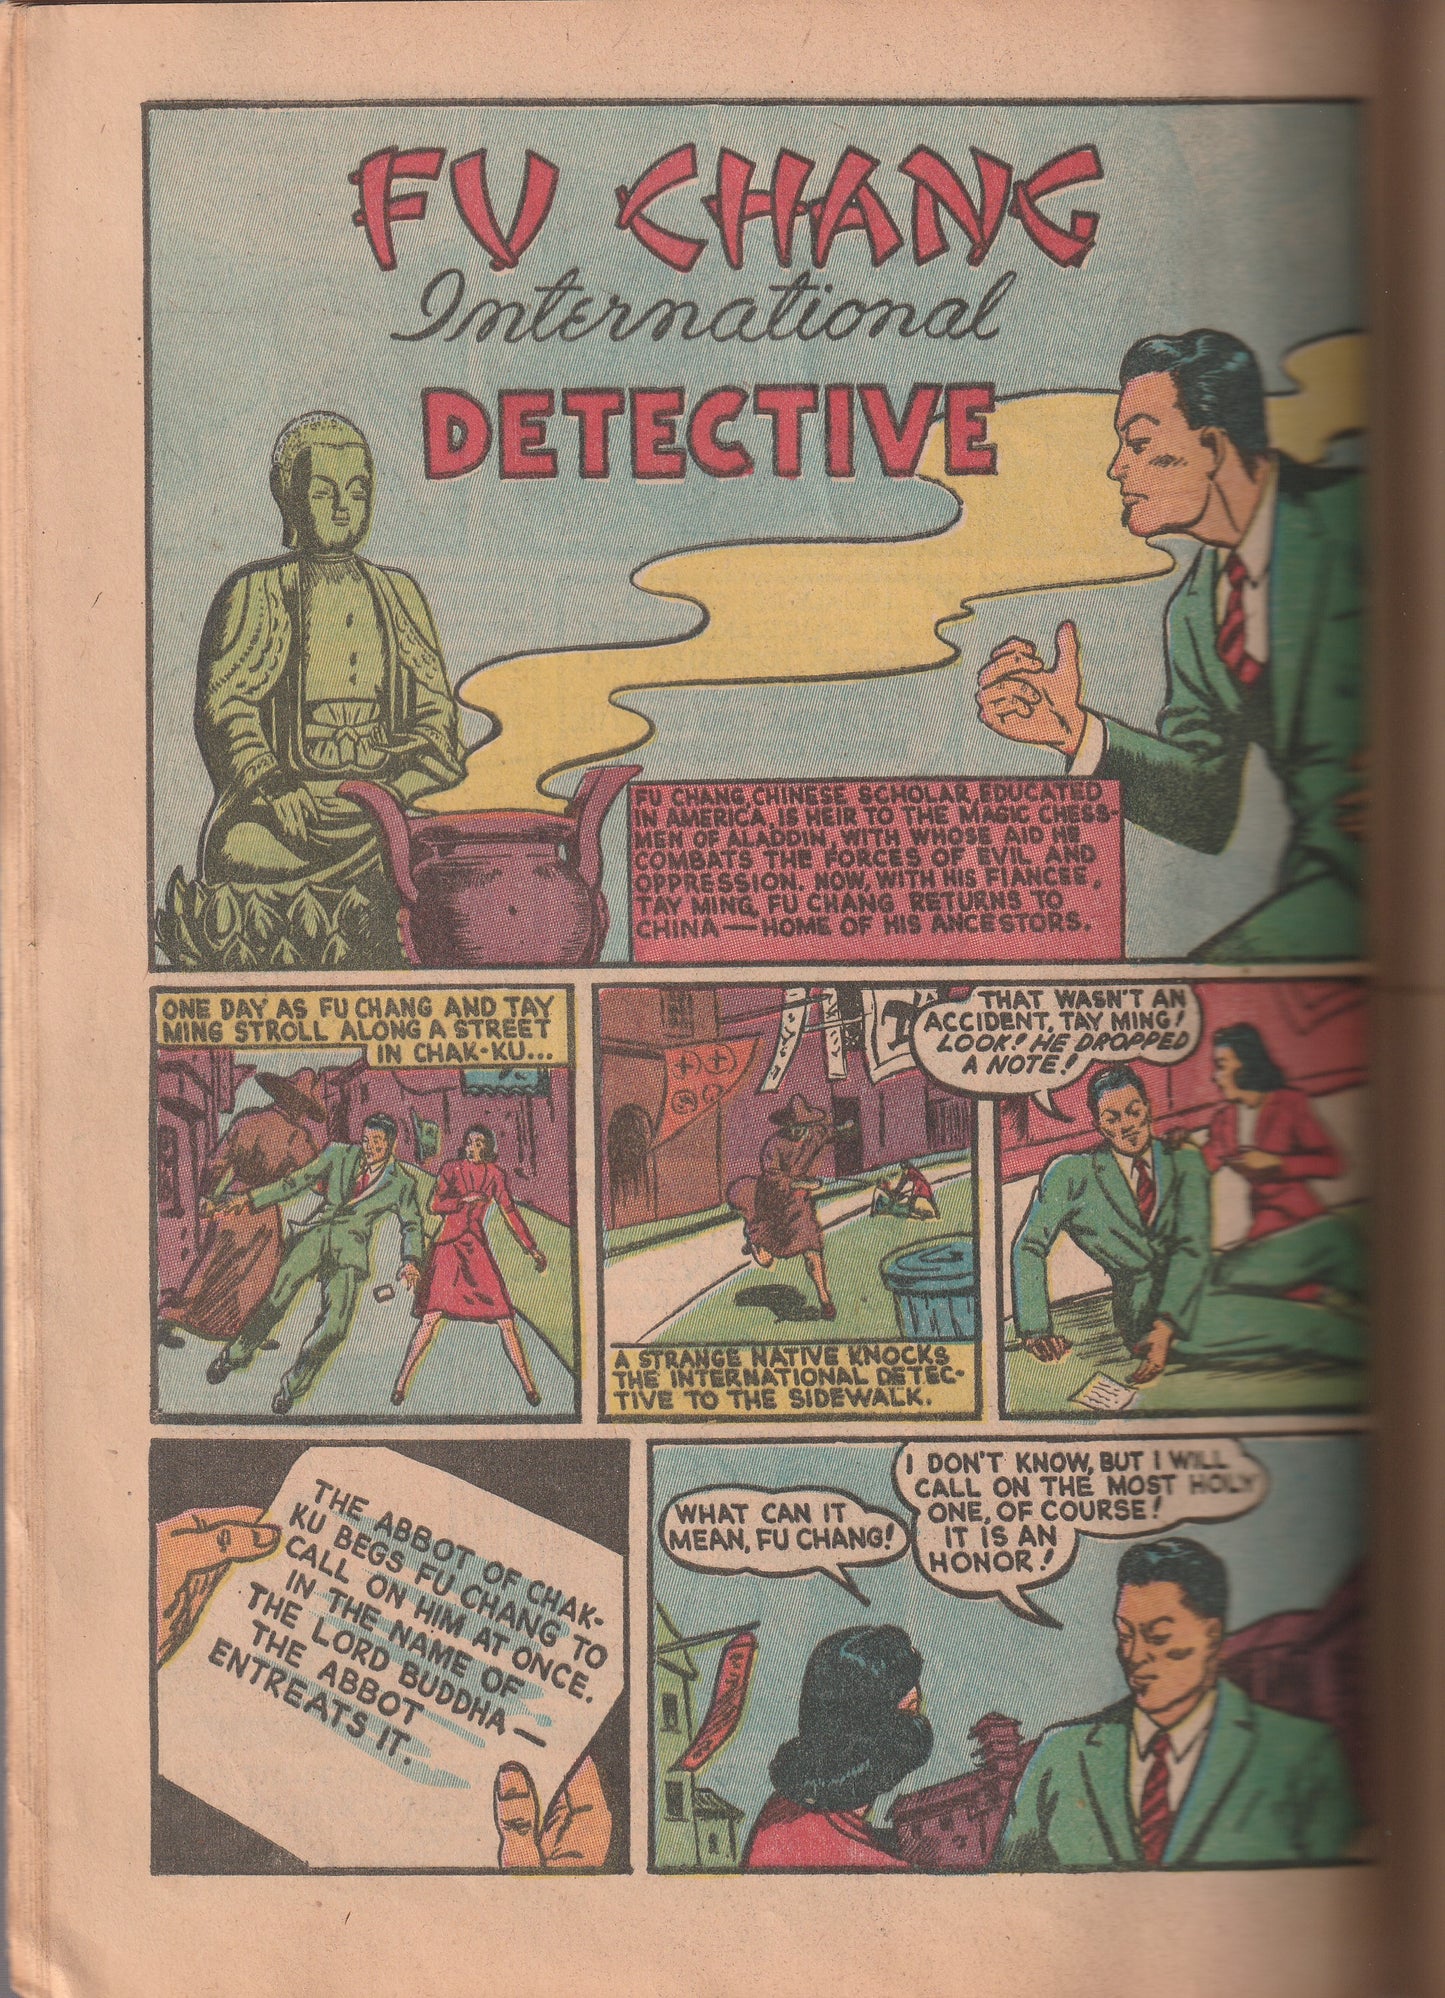 Pep Comics #11 (1941) - 1st Appearance of Dusty, Shield's sidekick